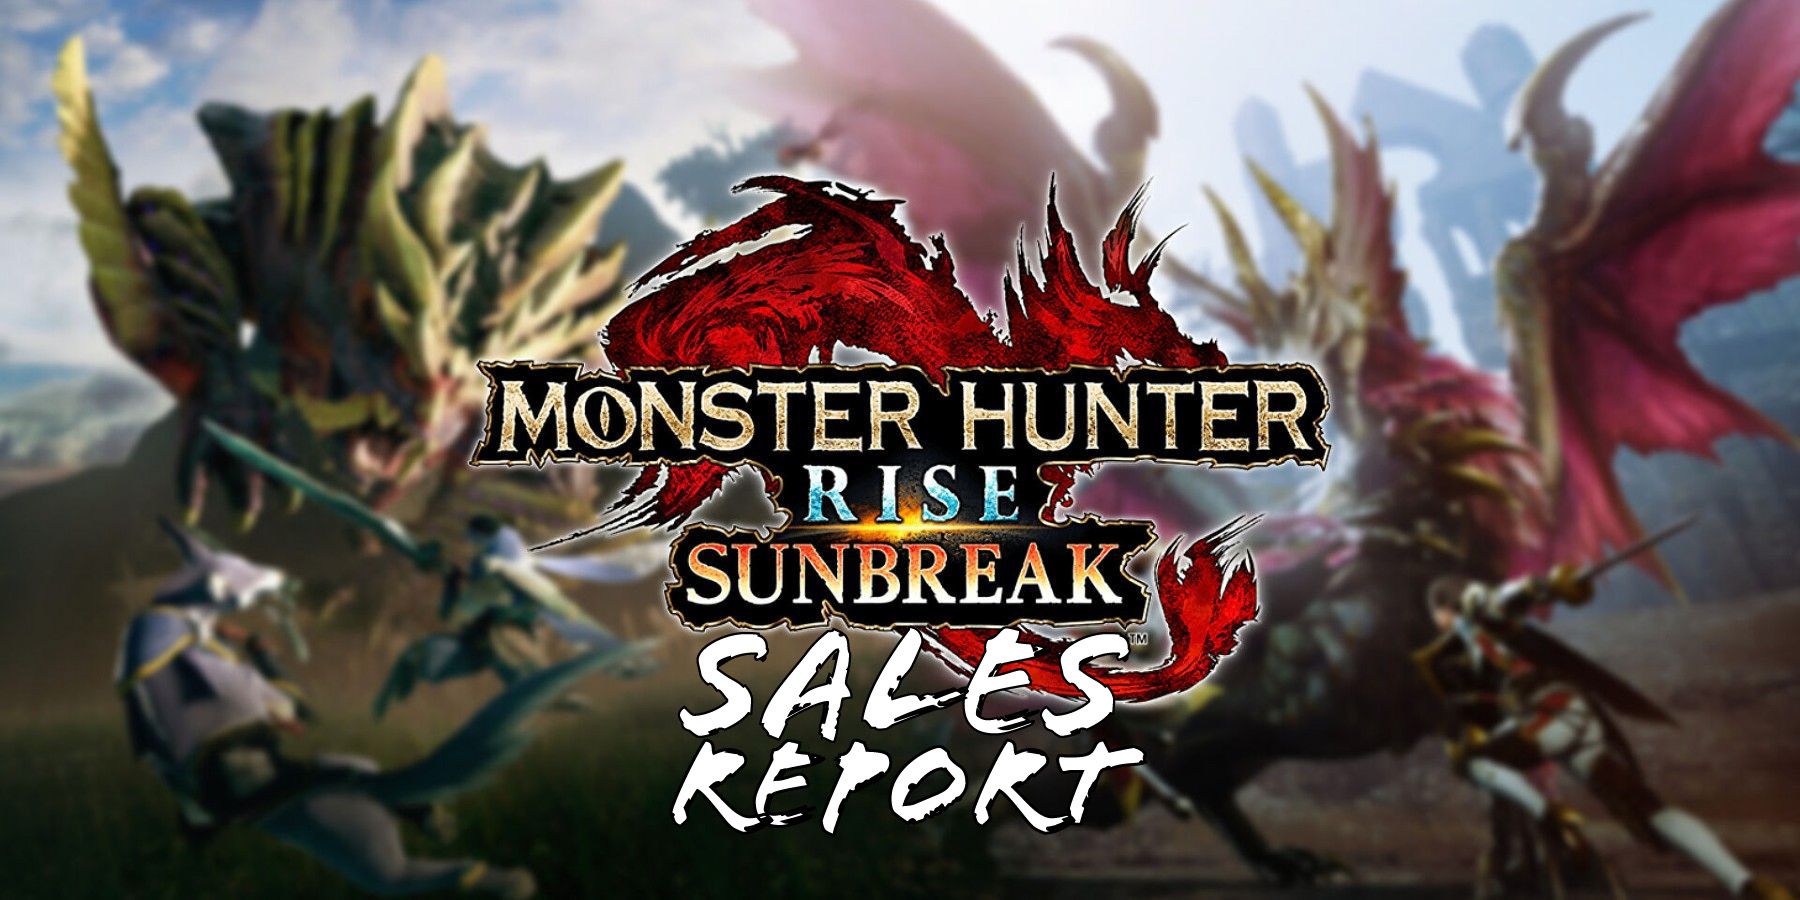 Monster Hunter Rise Sunbreak sales report GR featured